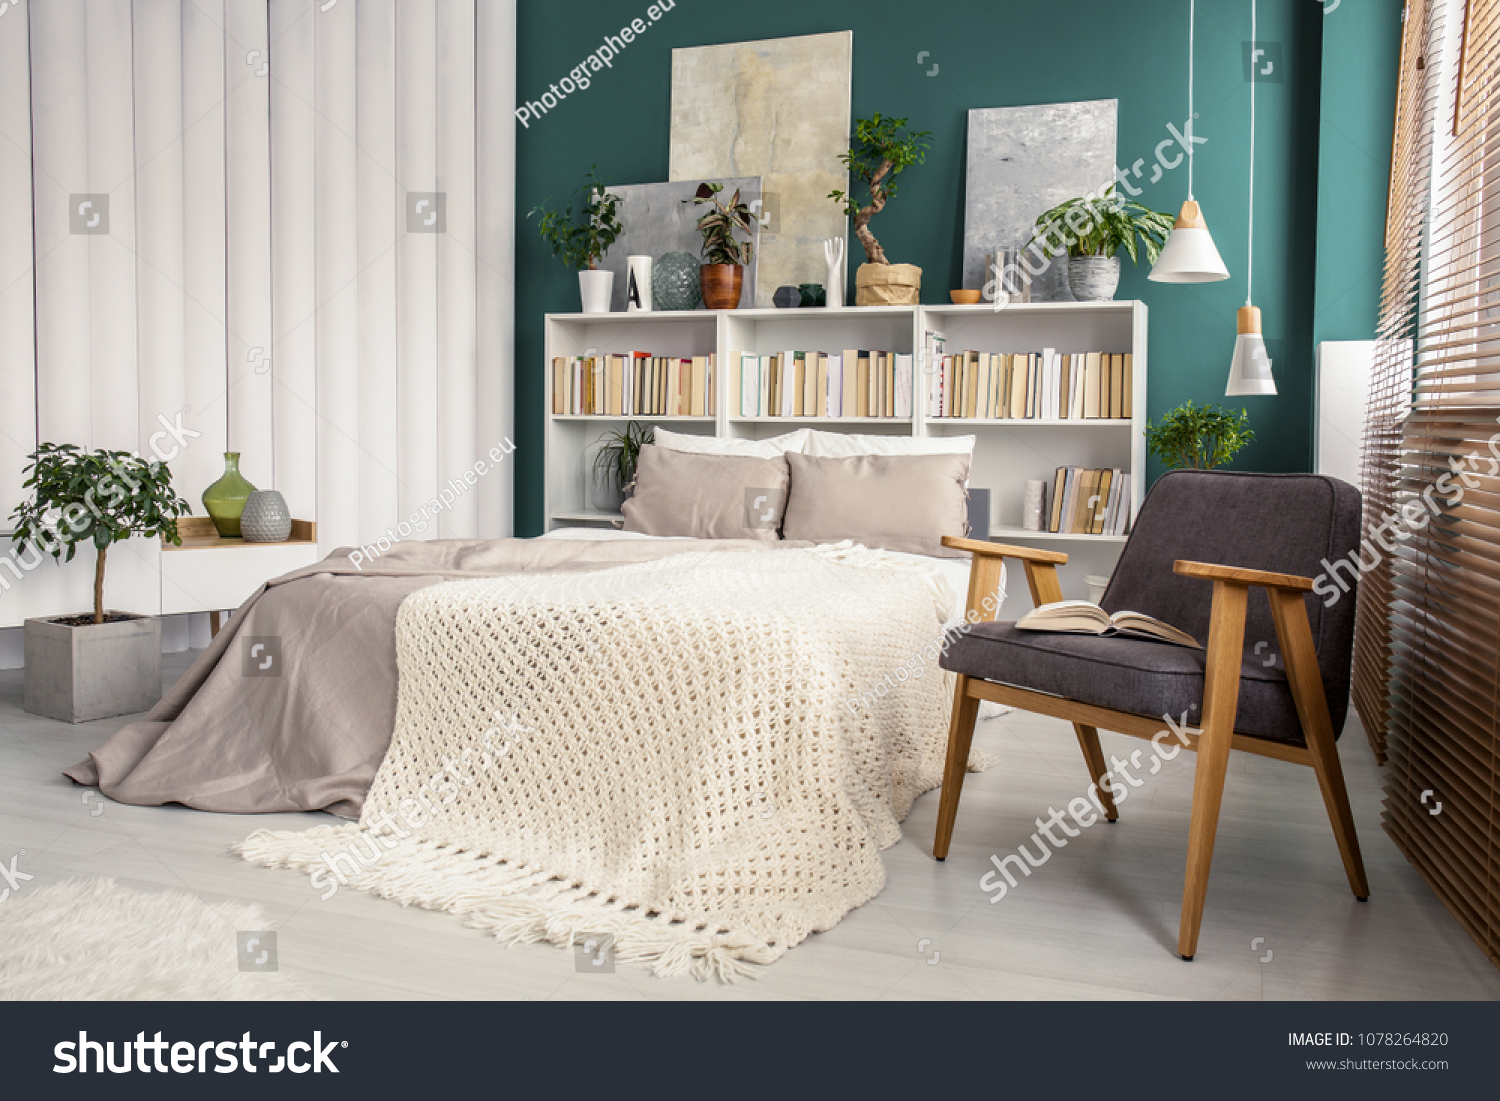 White Green Bedroom Interior Knit Blanket Stockfoto Jetzt